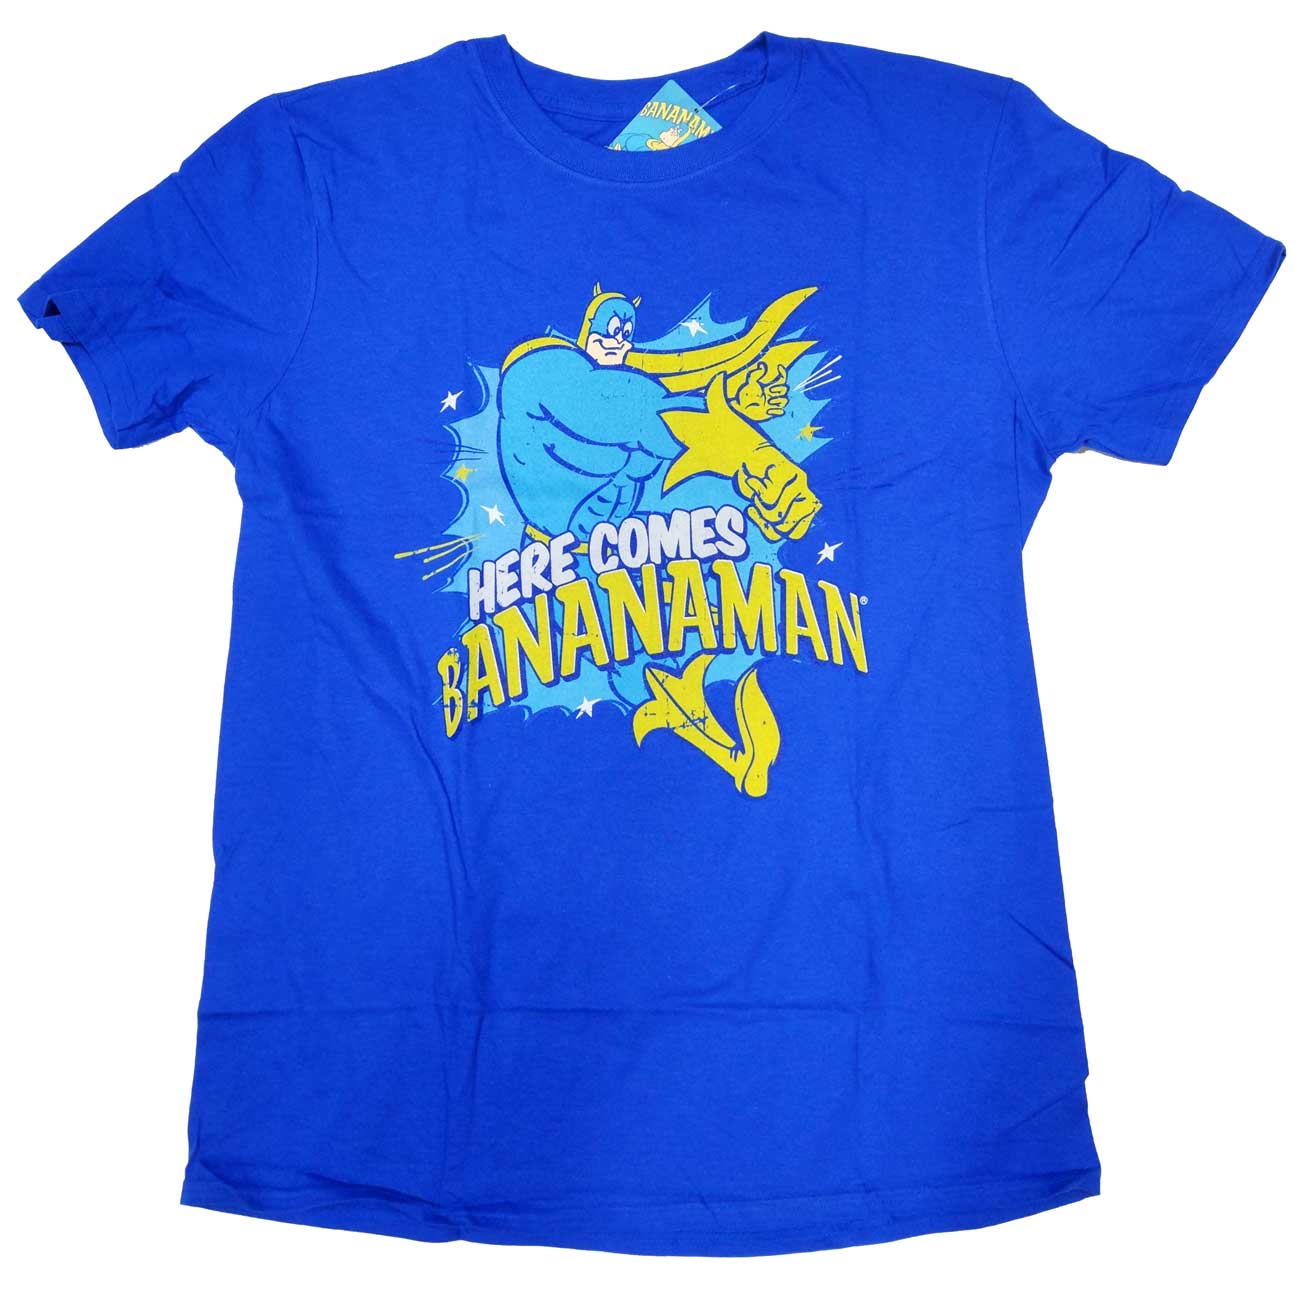 Bananaman T Shirt - Here Comes Bananaman 100% Official Classic Comic